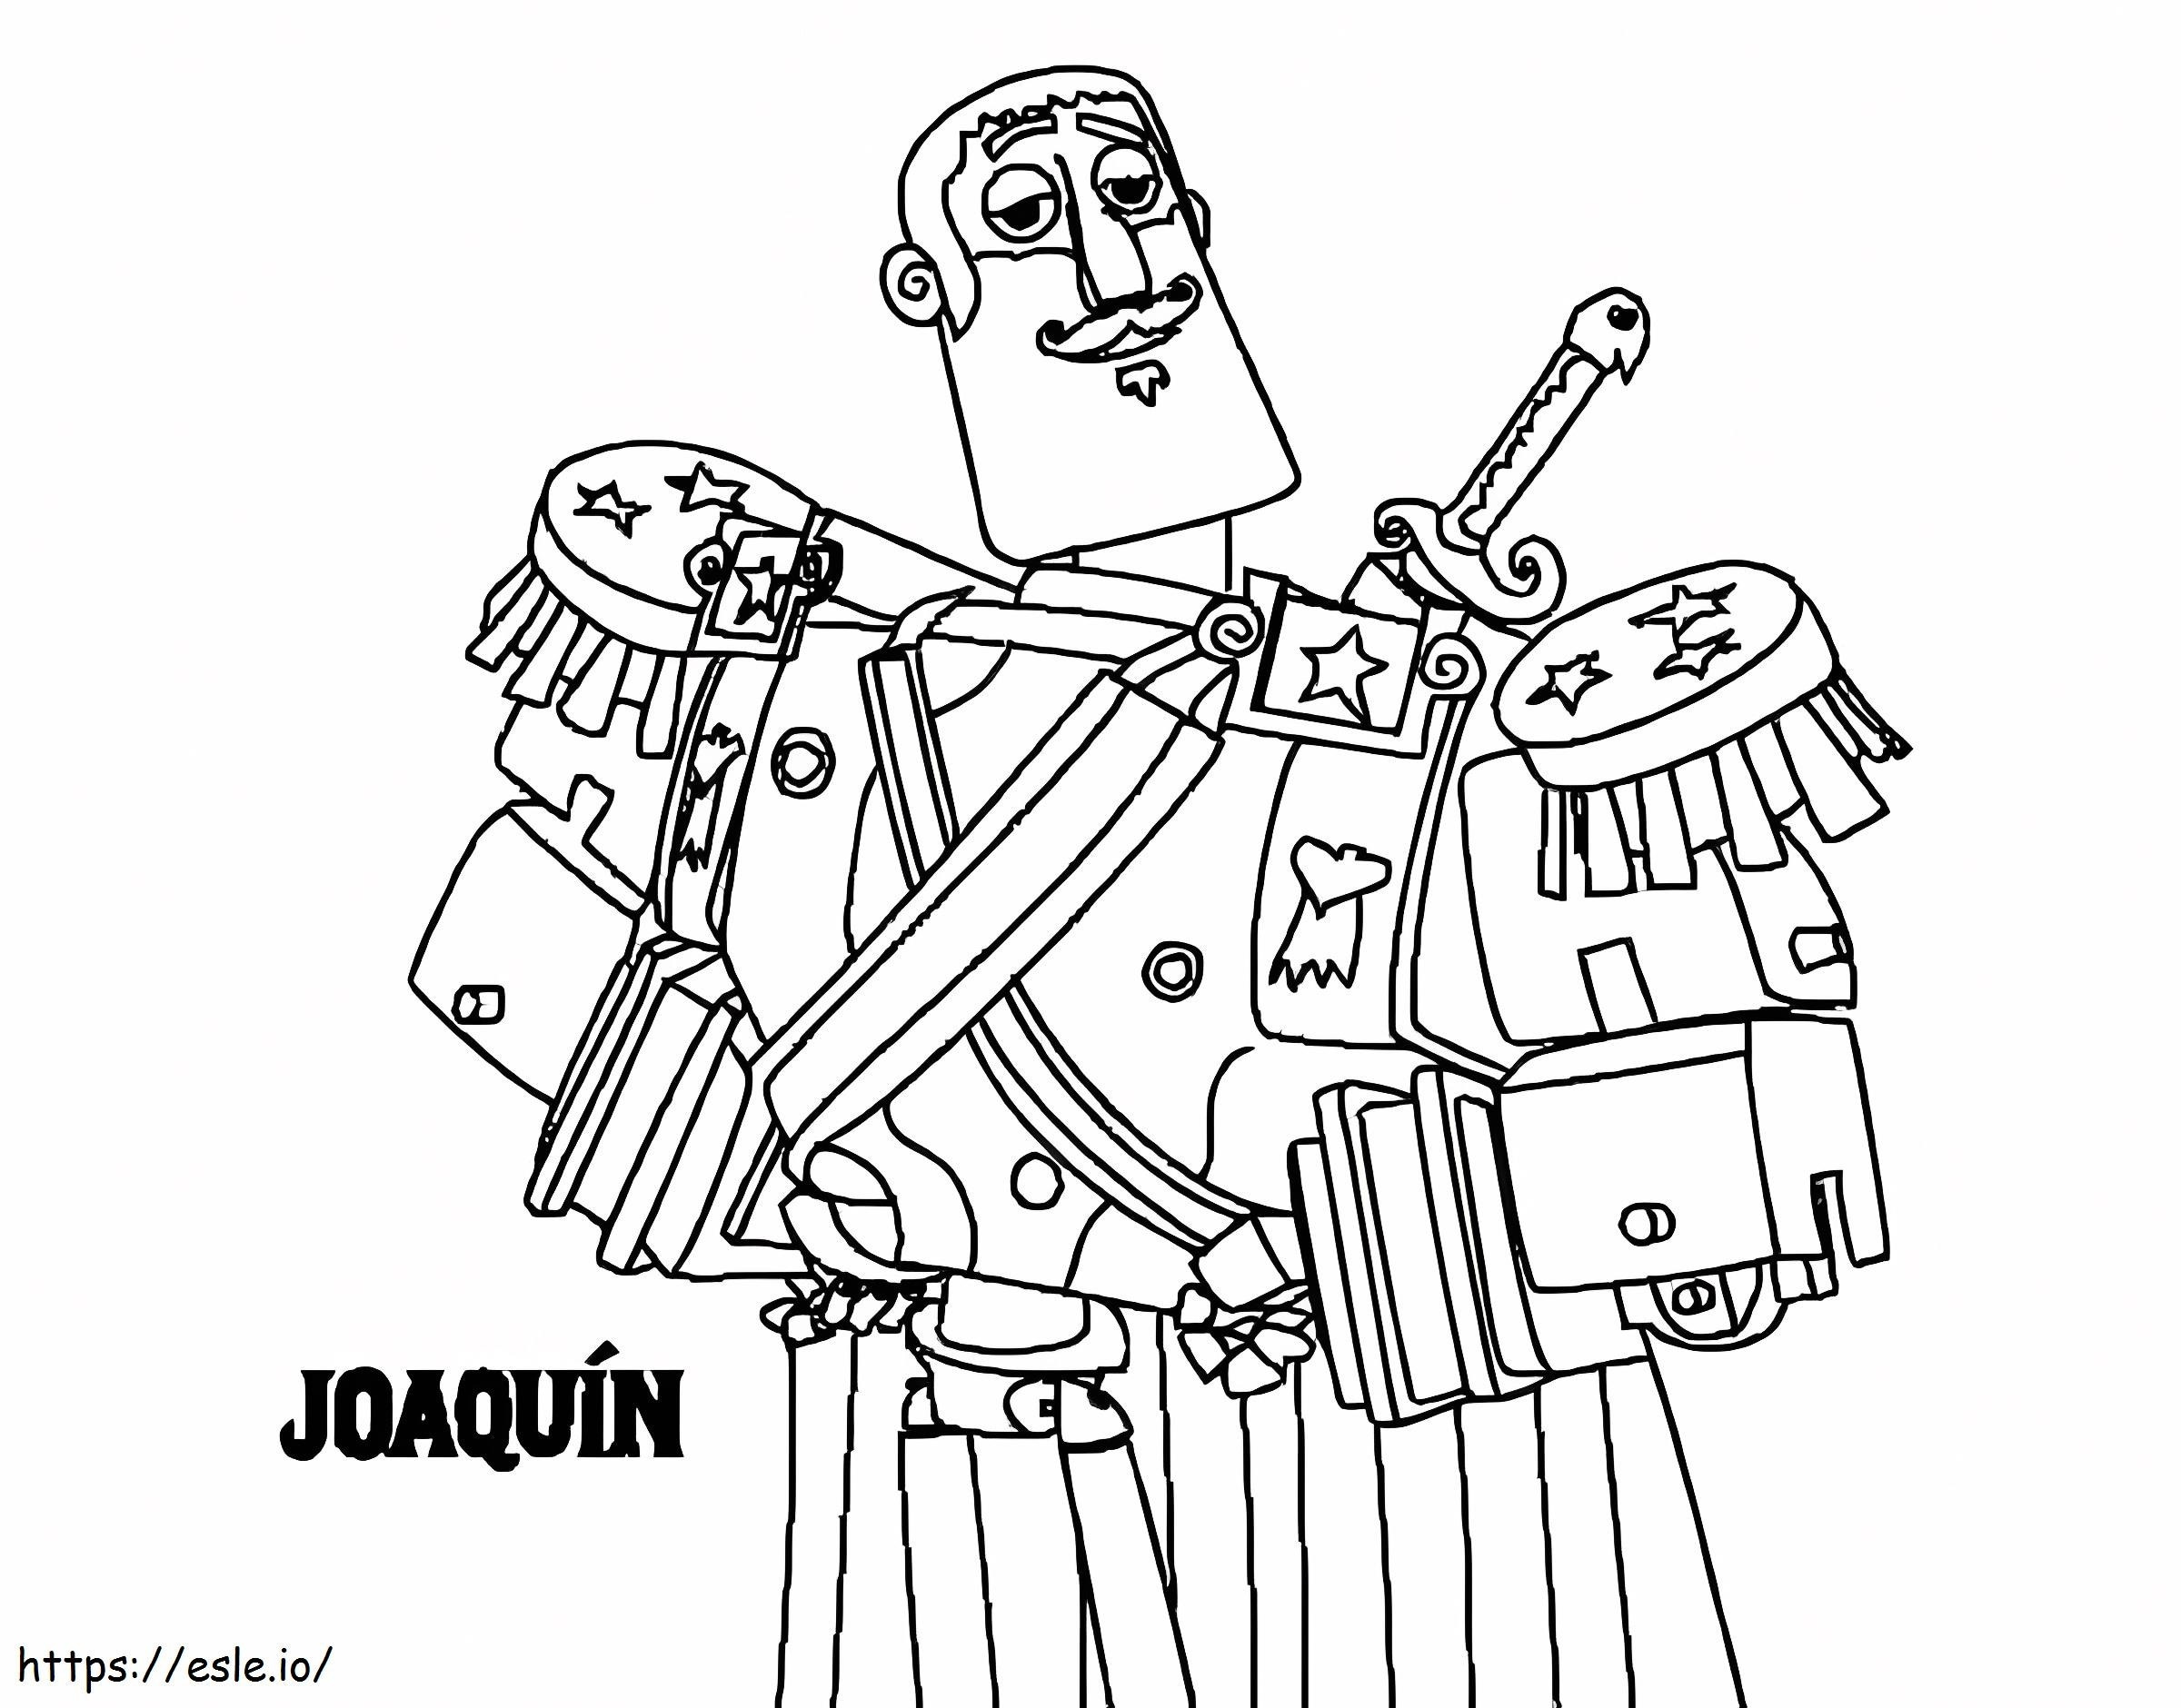 Joaquin aus dem Buch des Lebens ausmalbilder